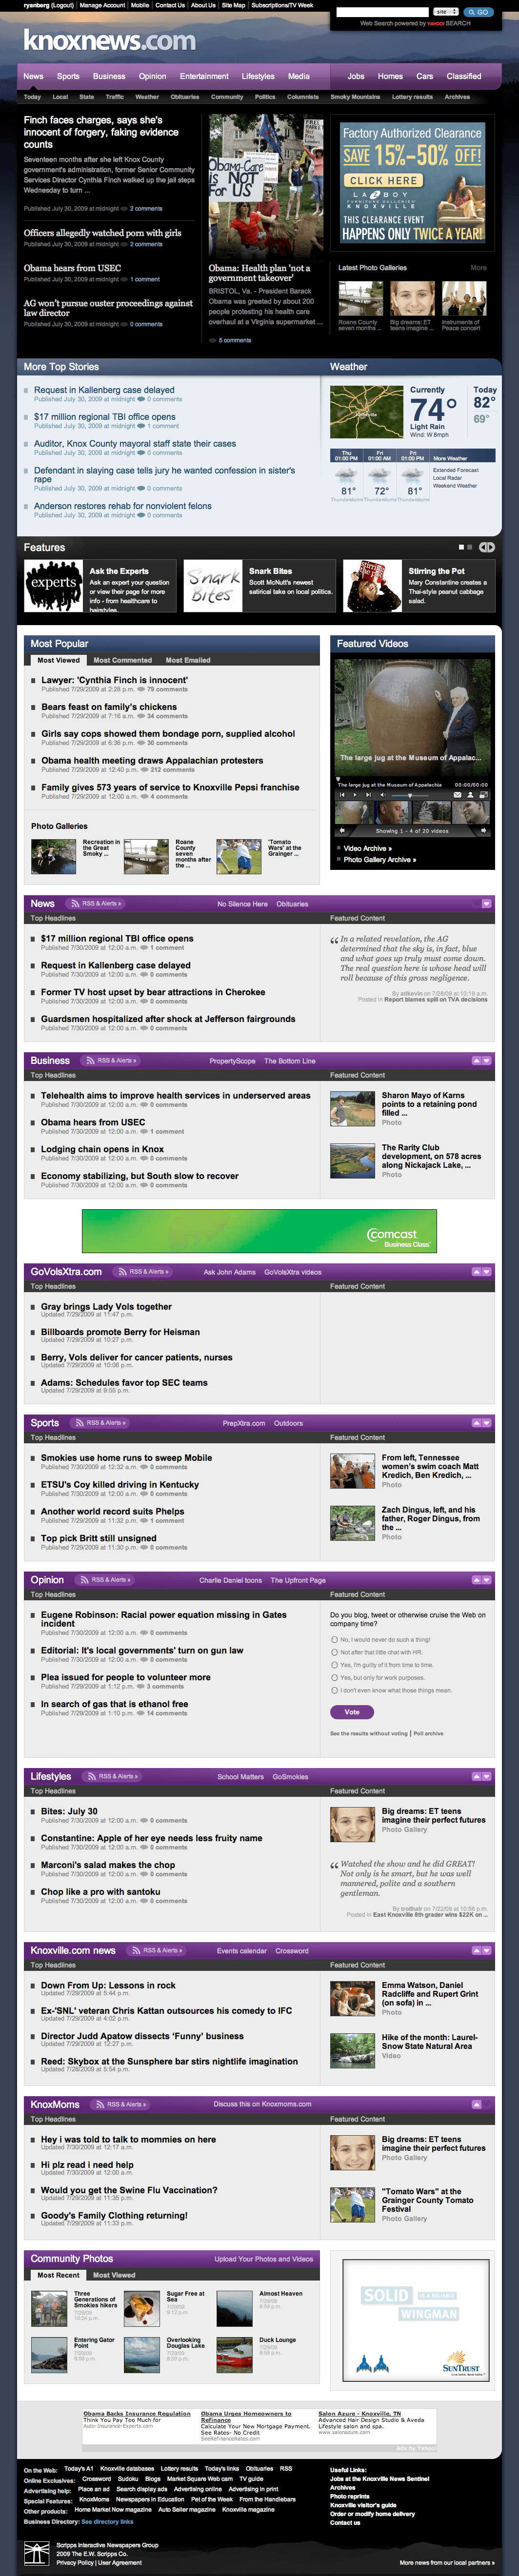 Screenshot of knoxnews.com homepage